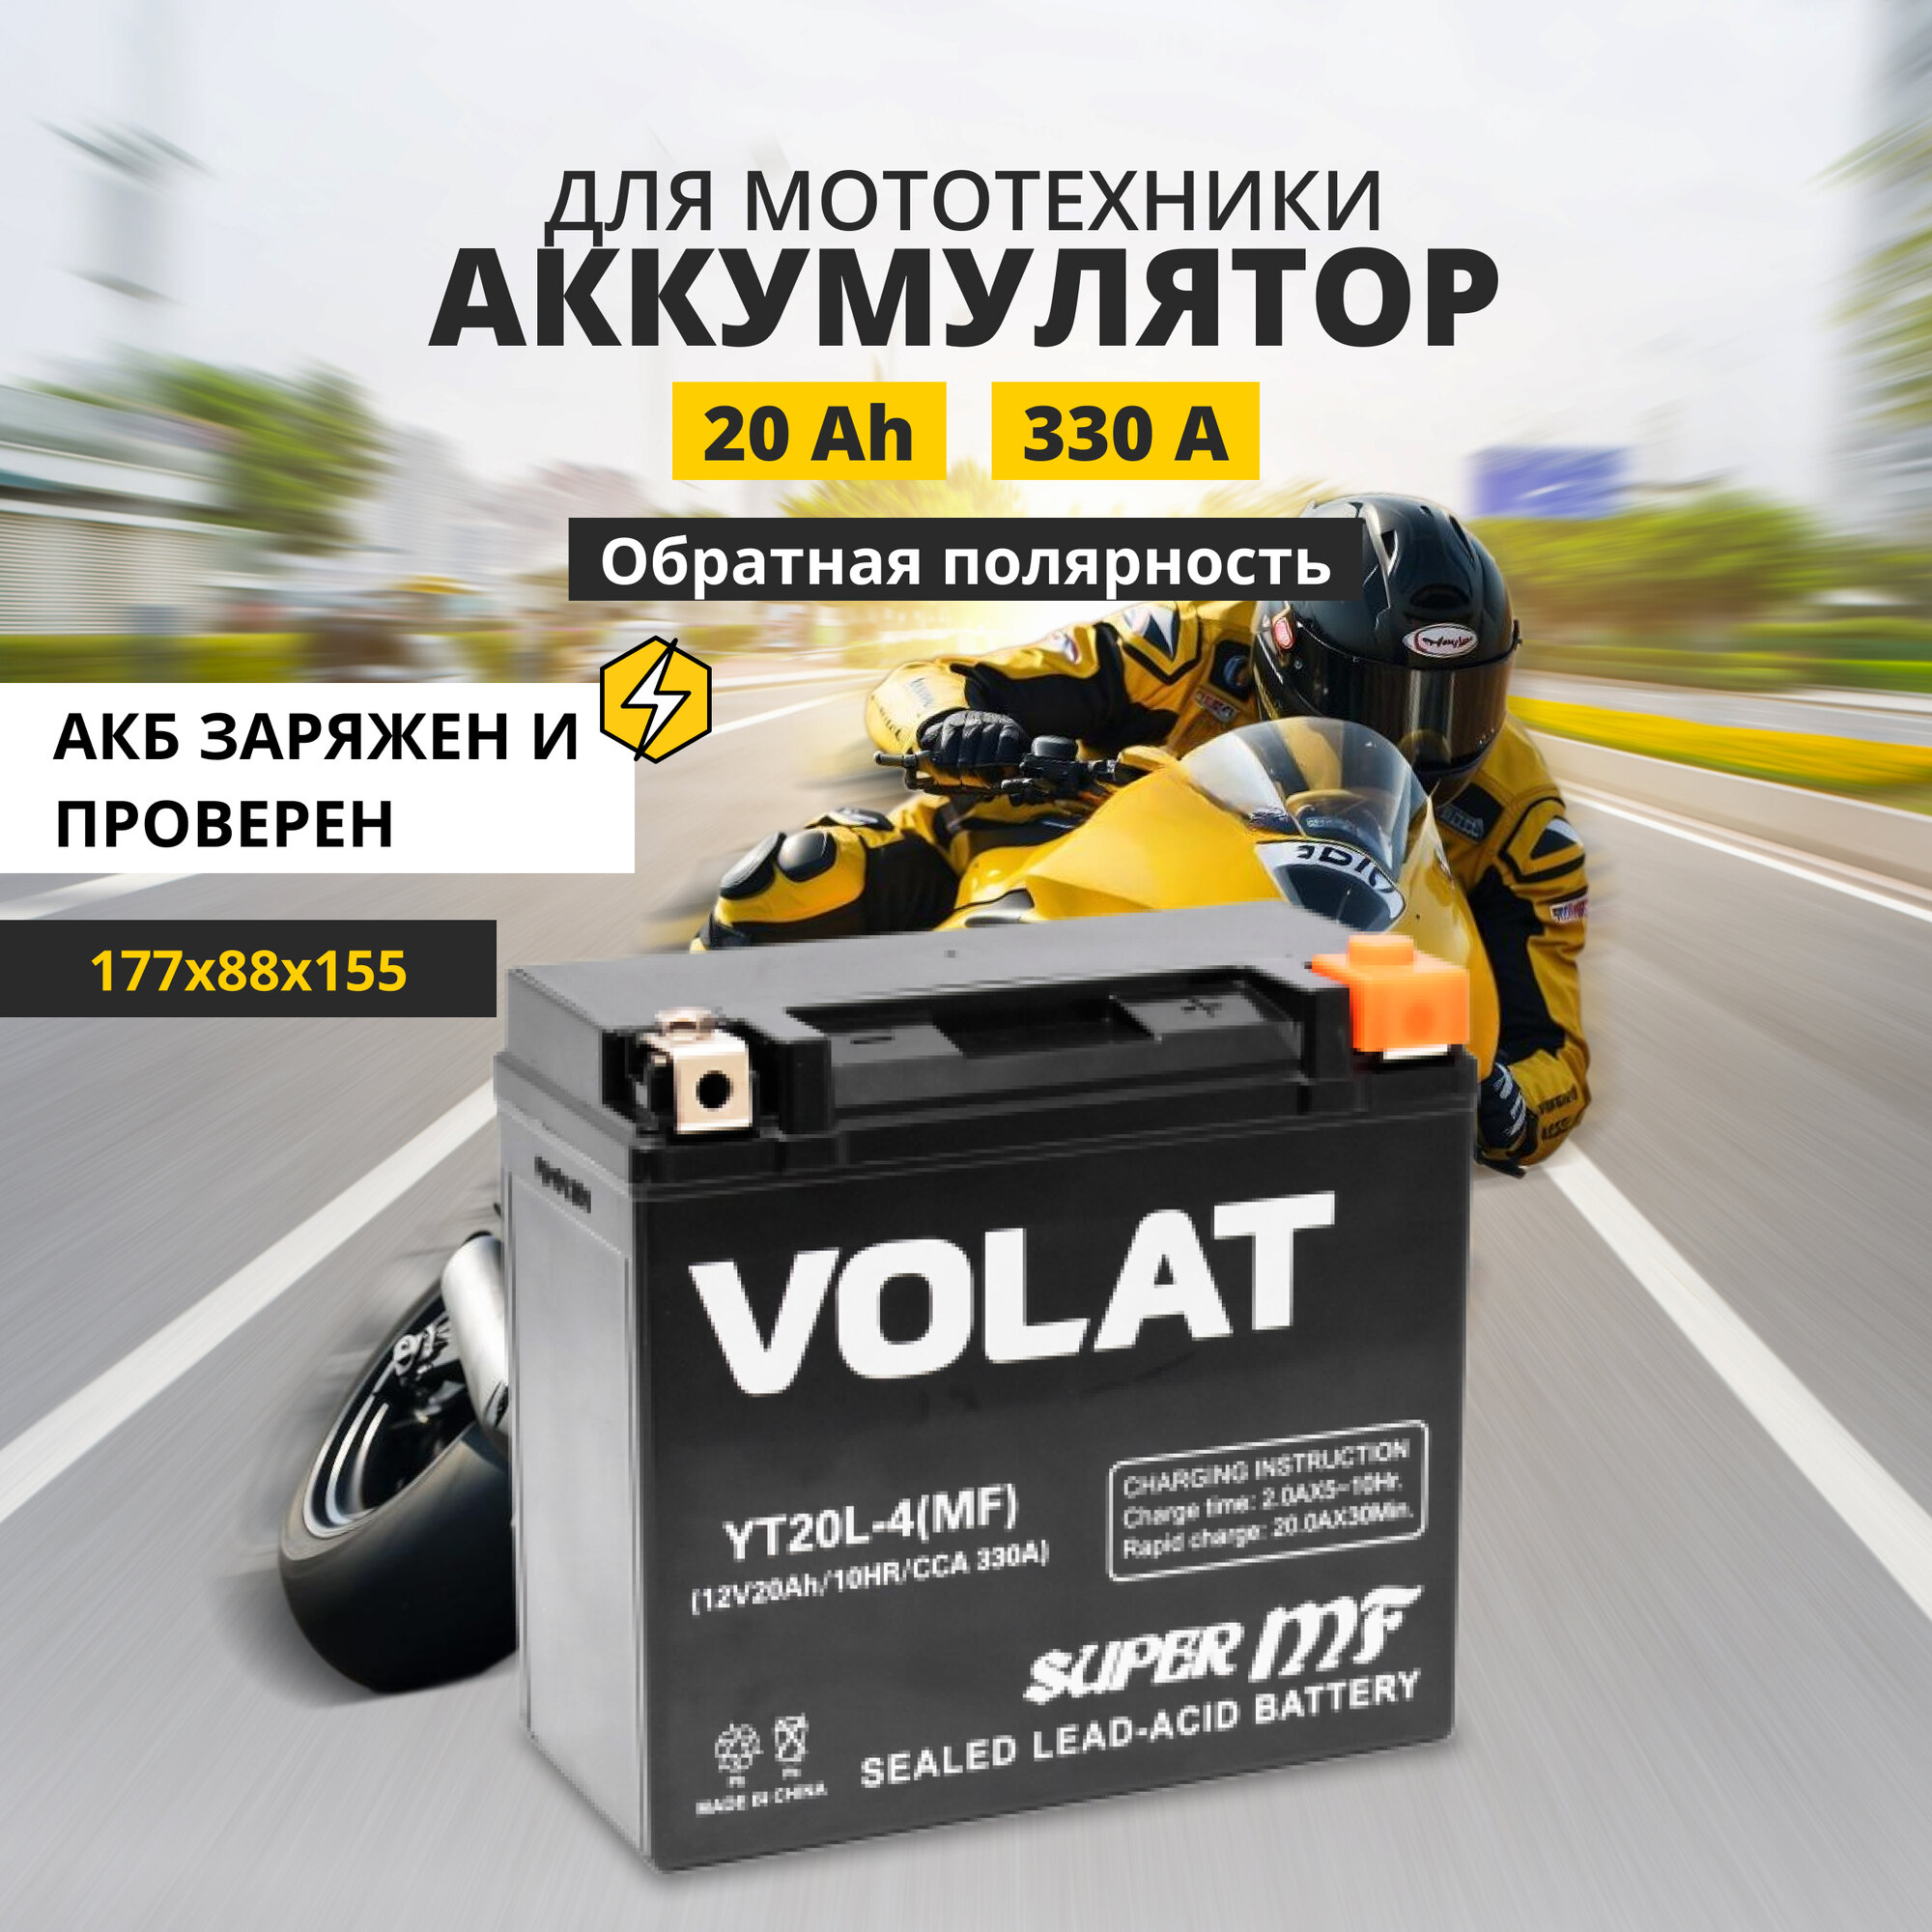 Аккумулятор для мотоцикла 12в 20 Ah 330 A обратная полярность VOLAT YT20L-4 (MF) акб 12v AGM для мопеда скутера квадроцикла 177x88x155